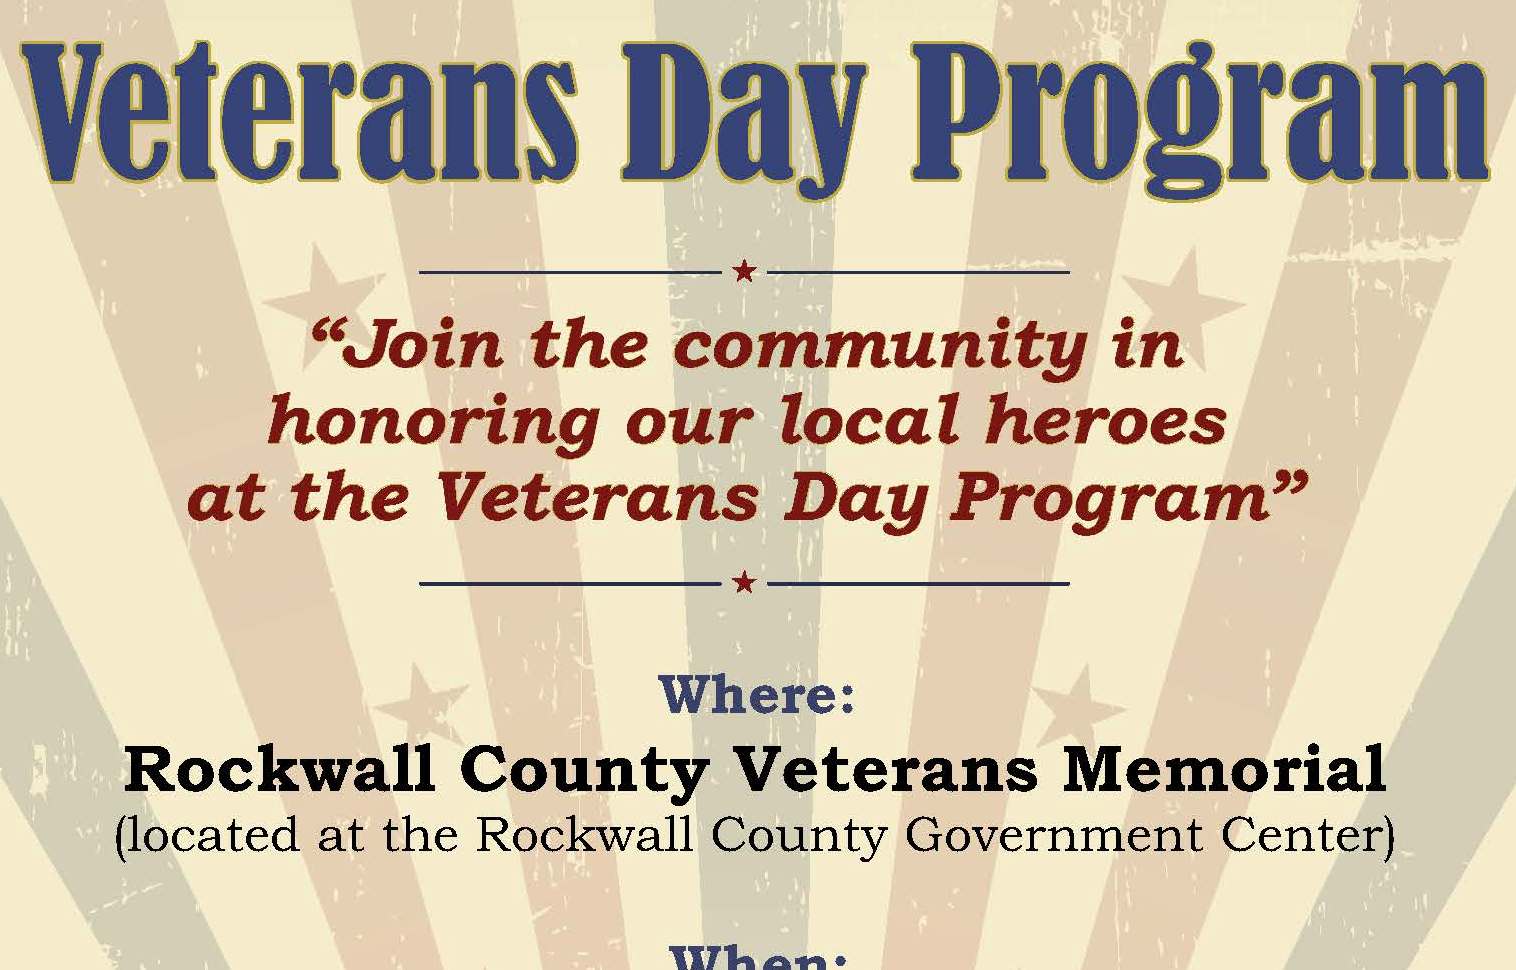 Rockwall Veterans Day Program to honor local heroes